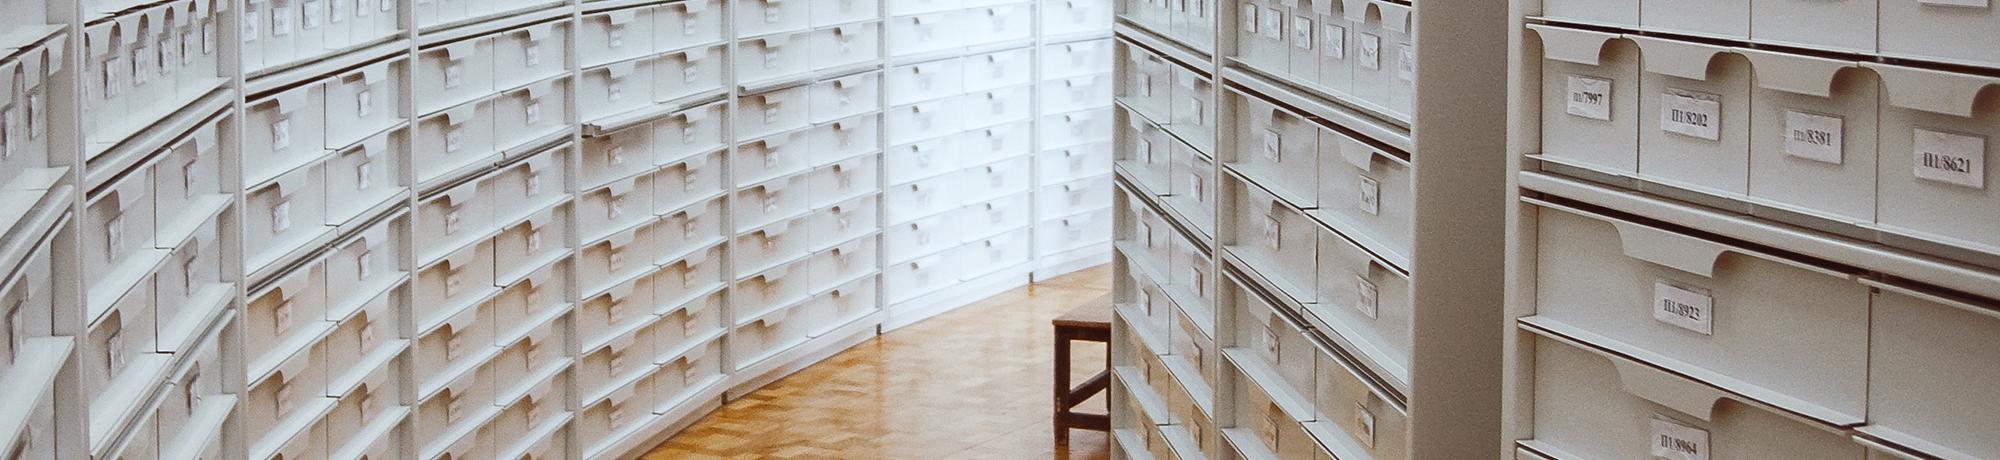 corridor of filing cabinets